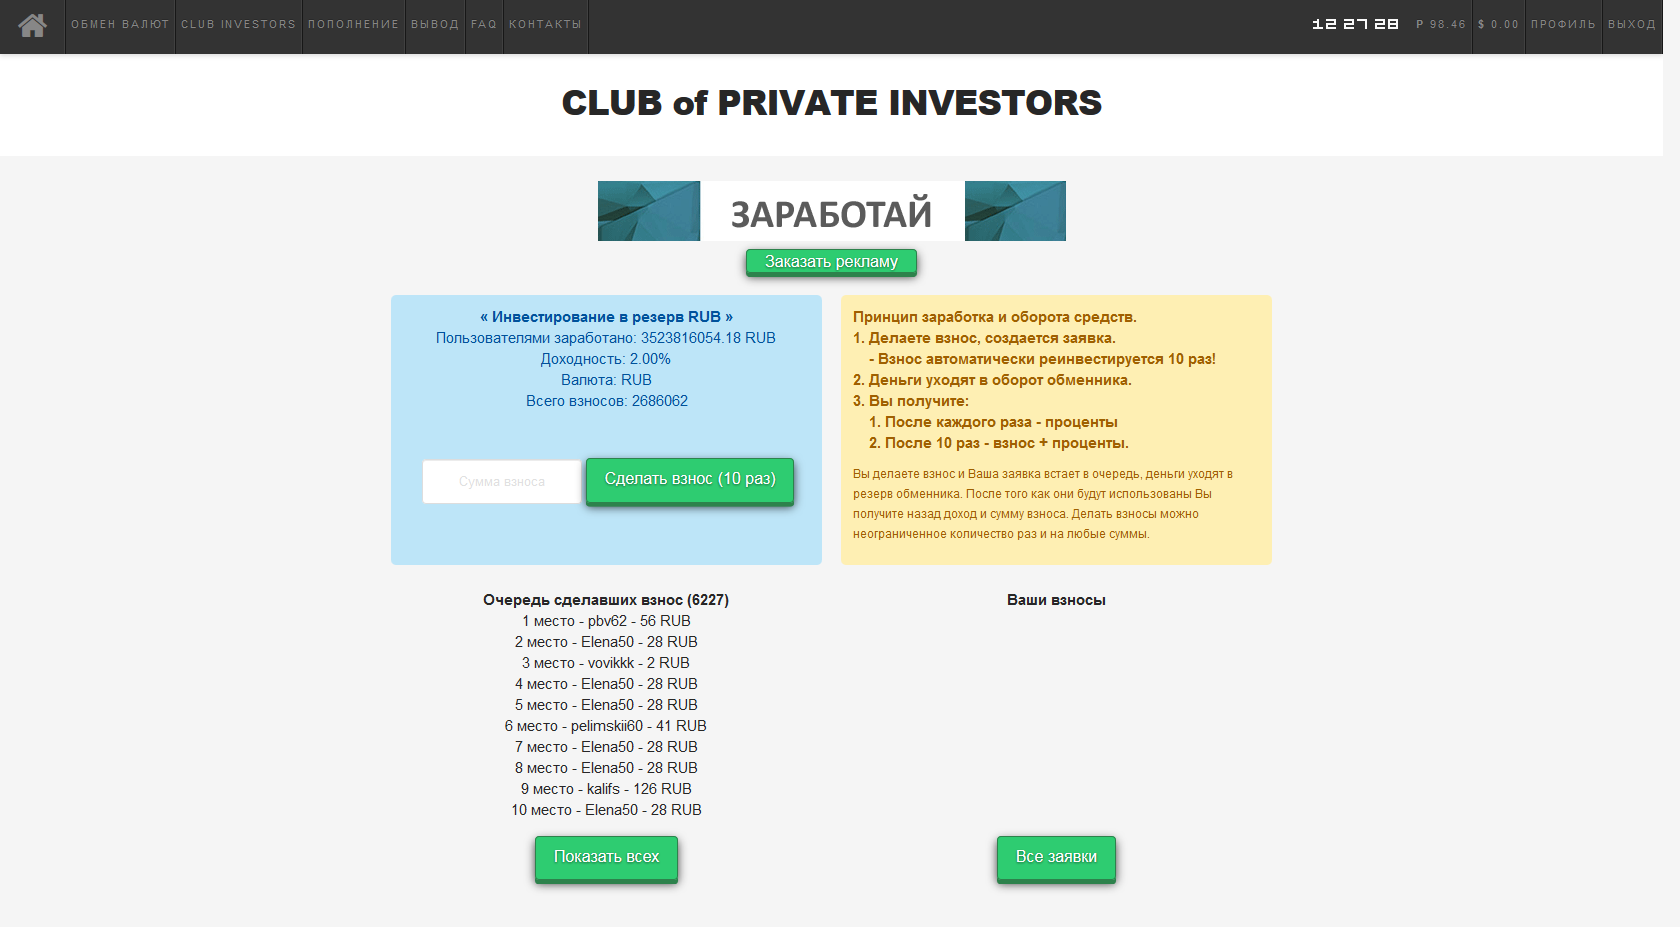 Screenshot-2018-1-30 1obmen com - CLUB of PRIVATE INVESTORS.png